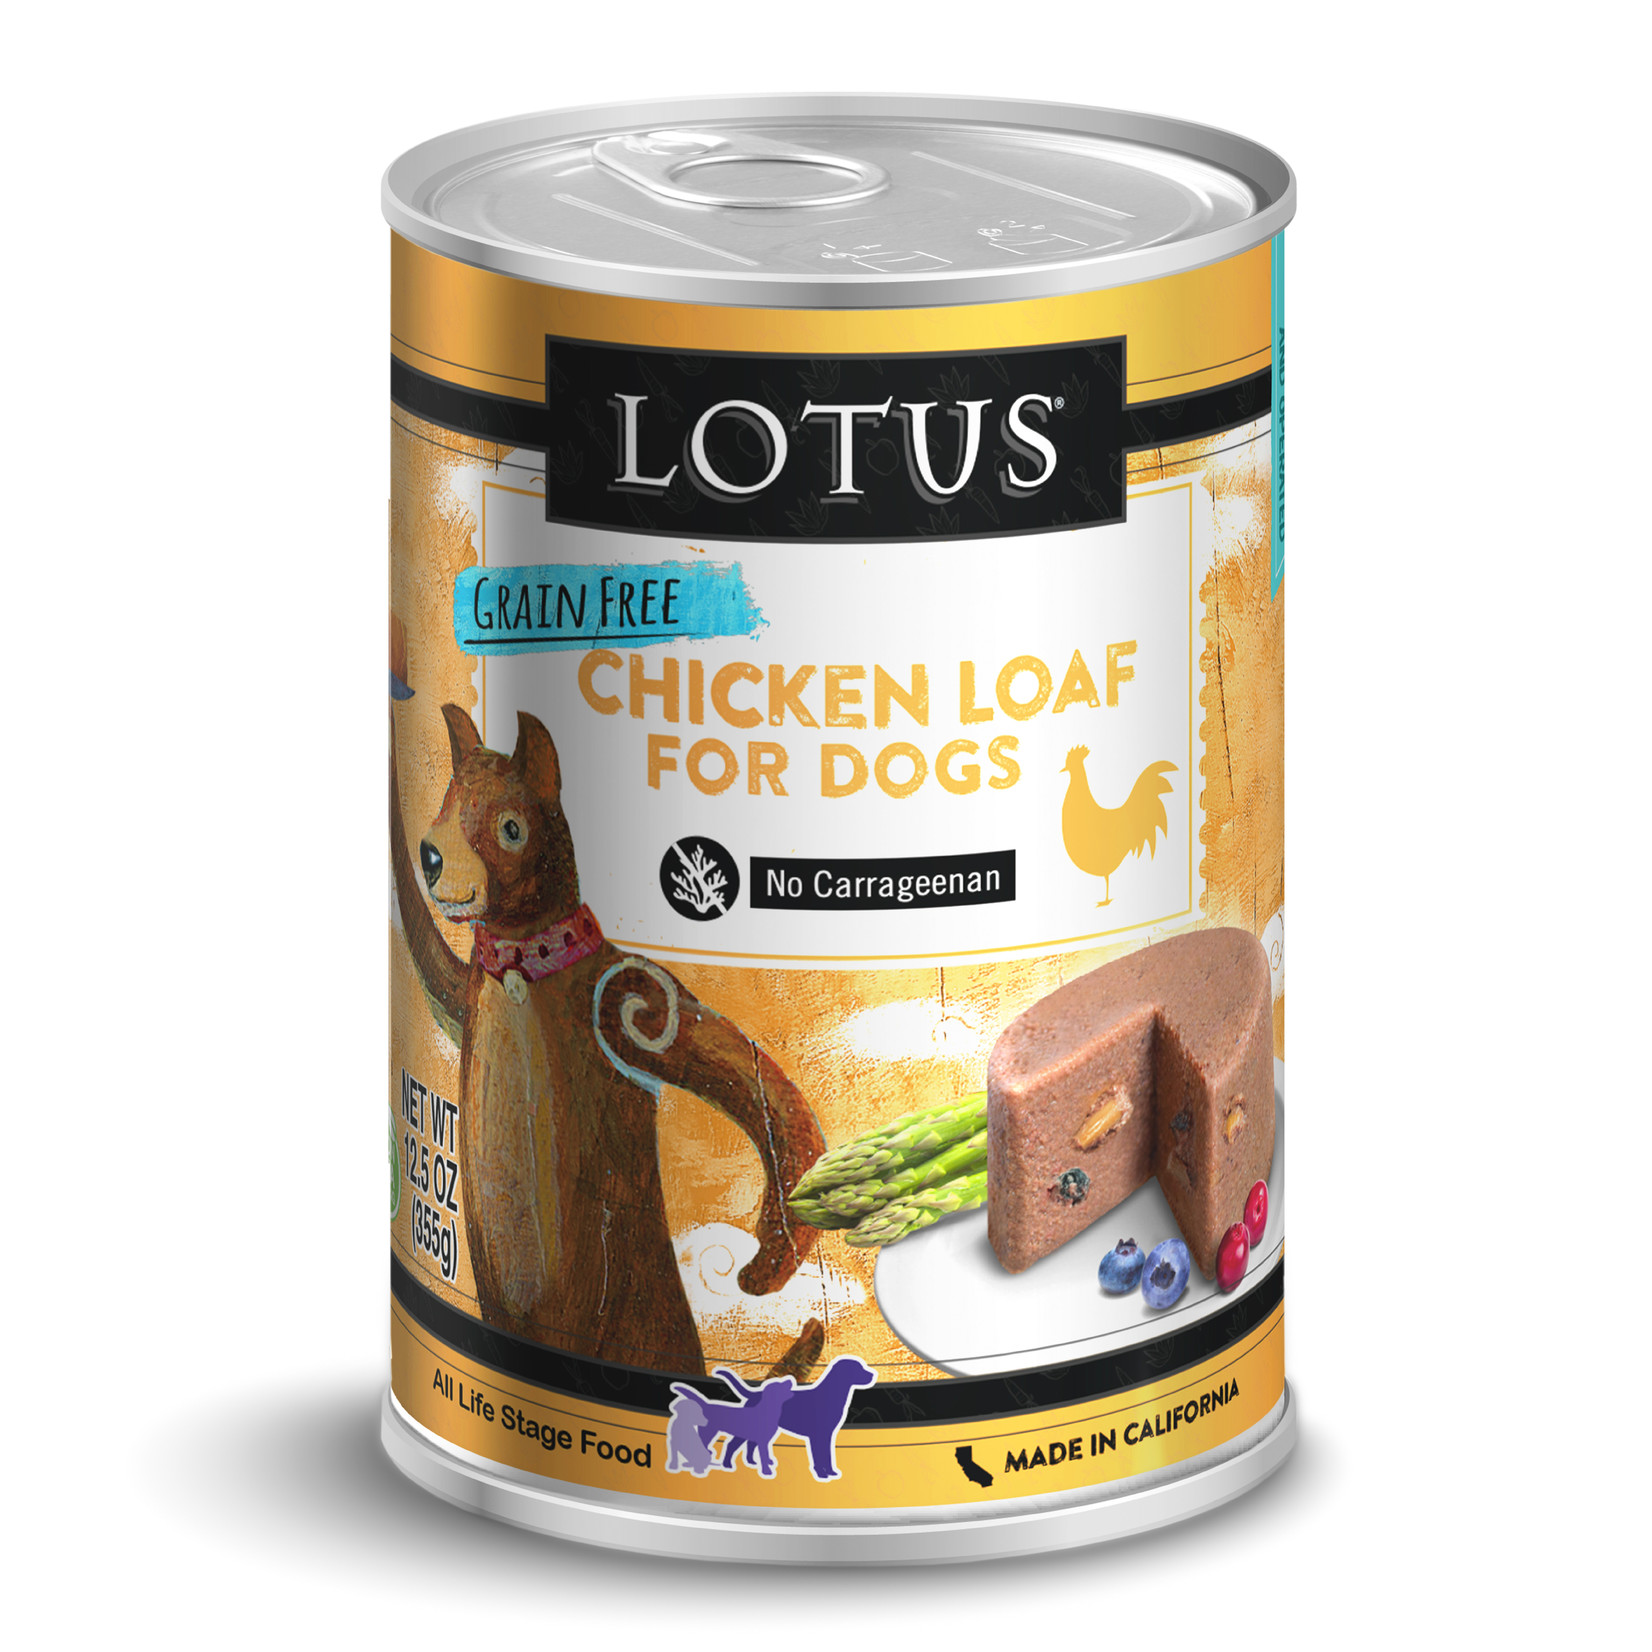 Lotus Lotus Chicken Loaf Canned Dog Food 12.5oz